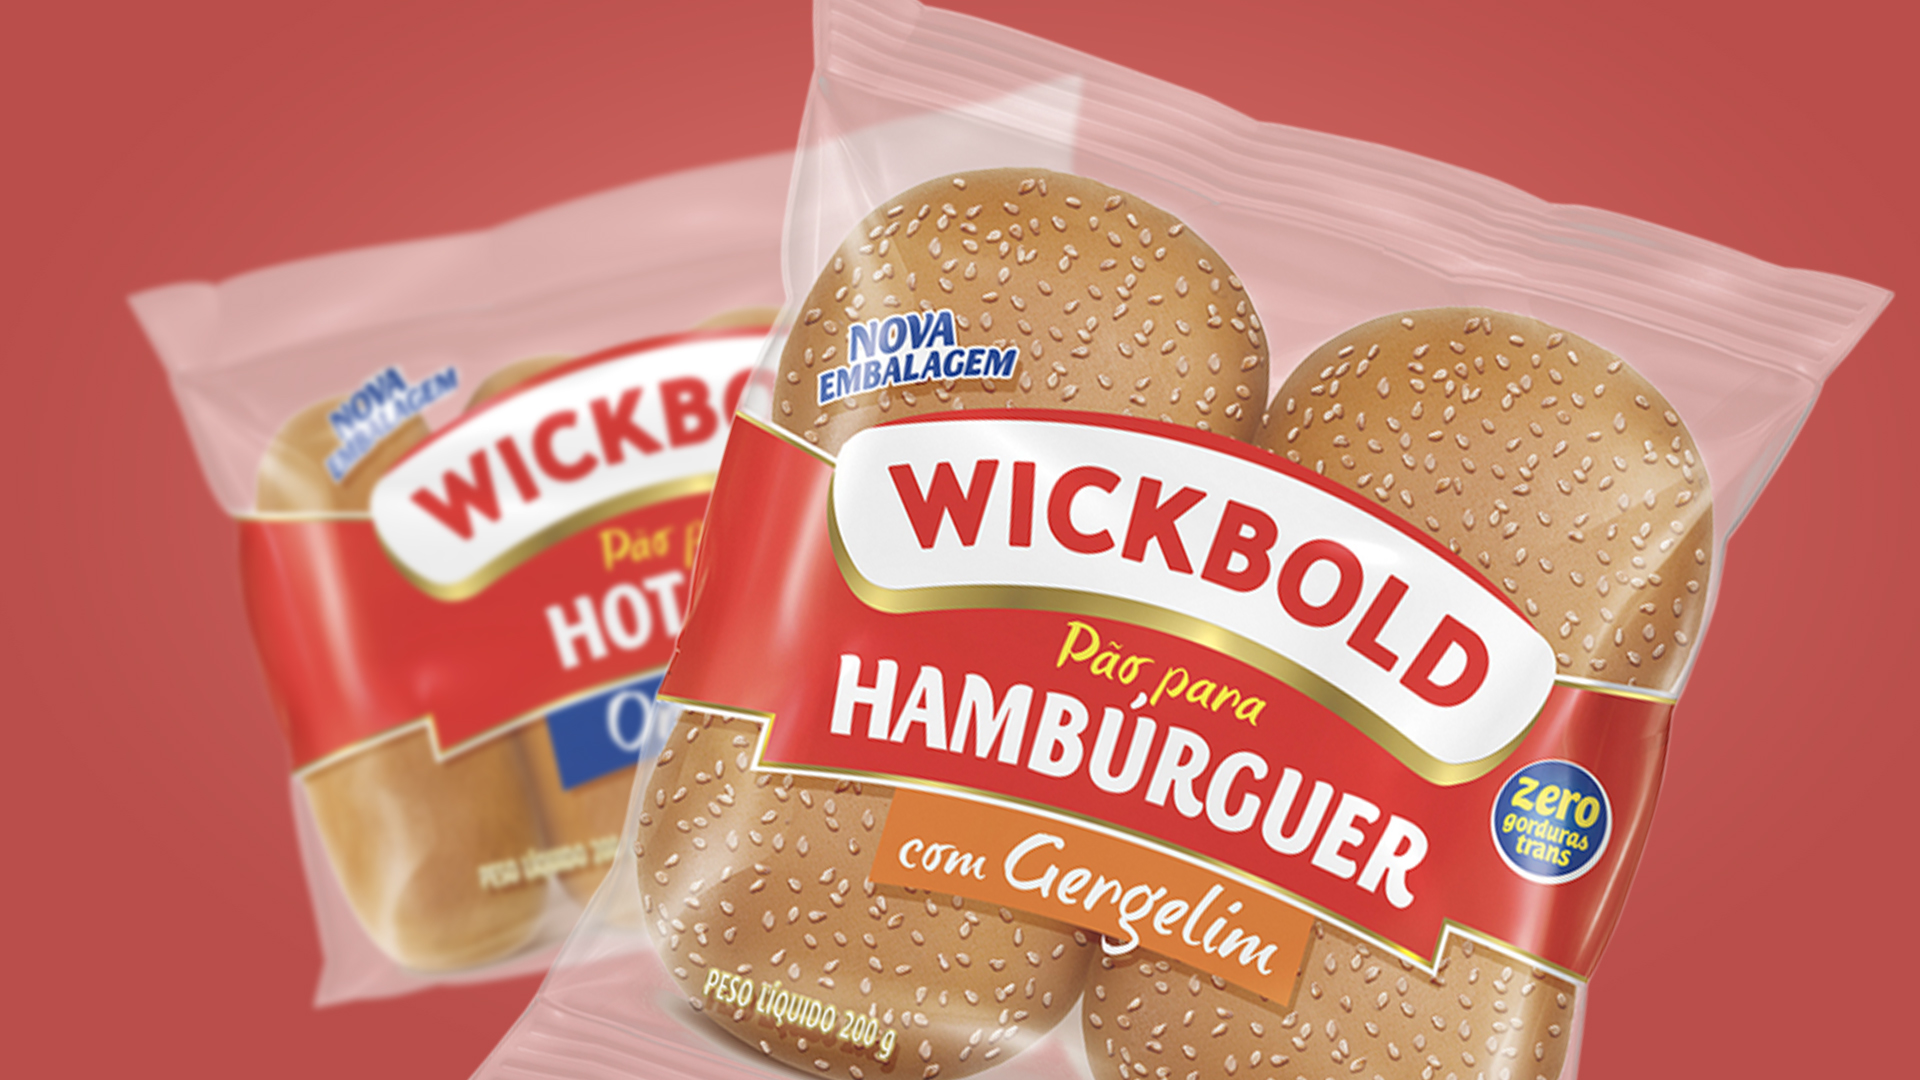 Wickbold Pão de Hamburguer